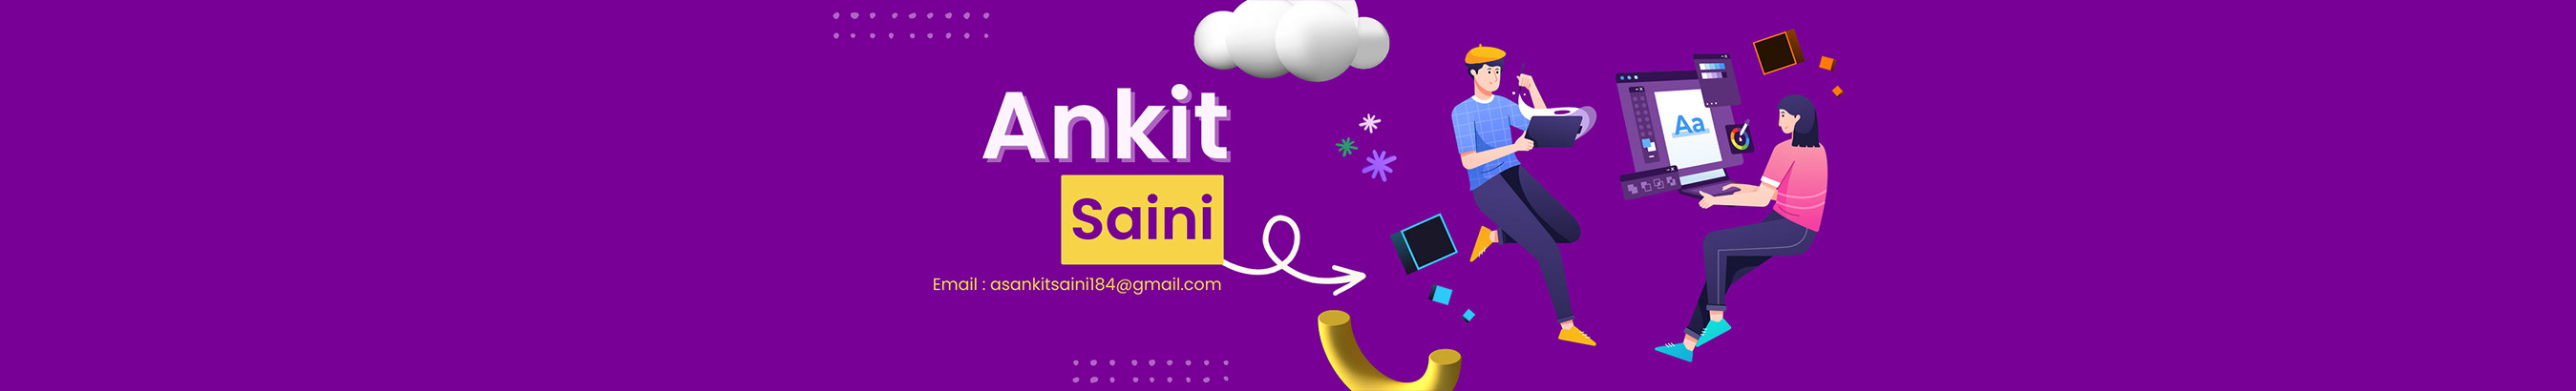 Banner de perfil de Ankit Saini